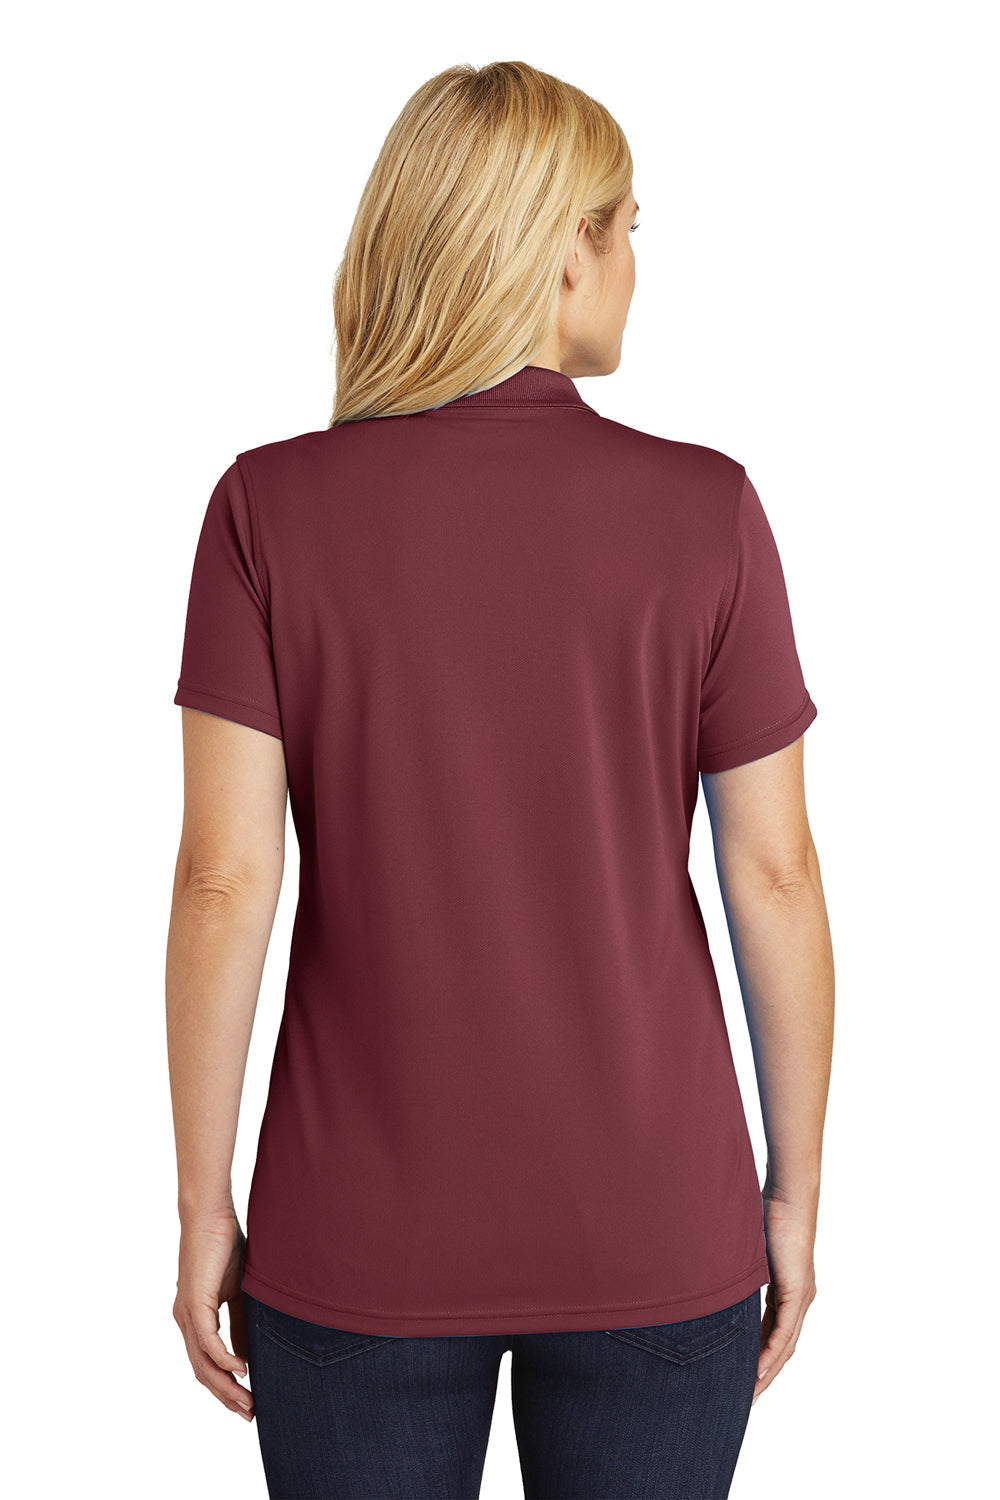 Port Authority LK110 Womens Dry Zone Moisture Wicking Short Sleeve Polo Shirt Burgundy Back